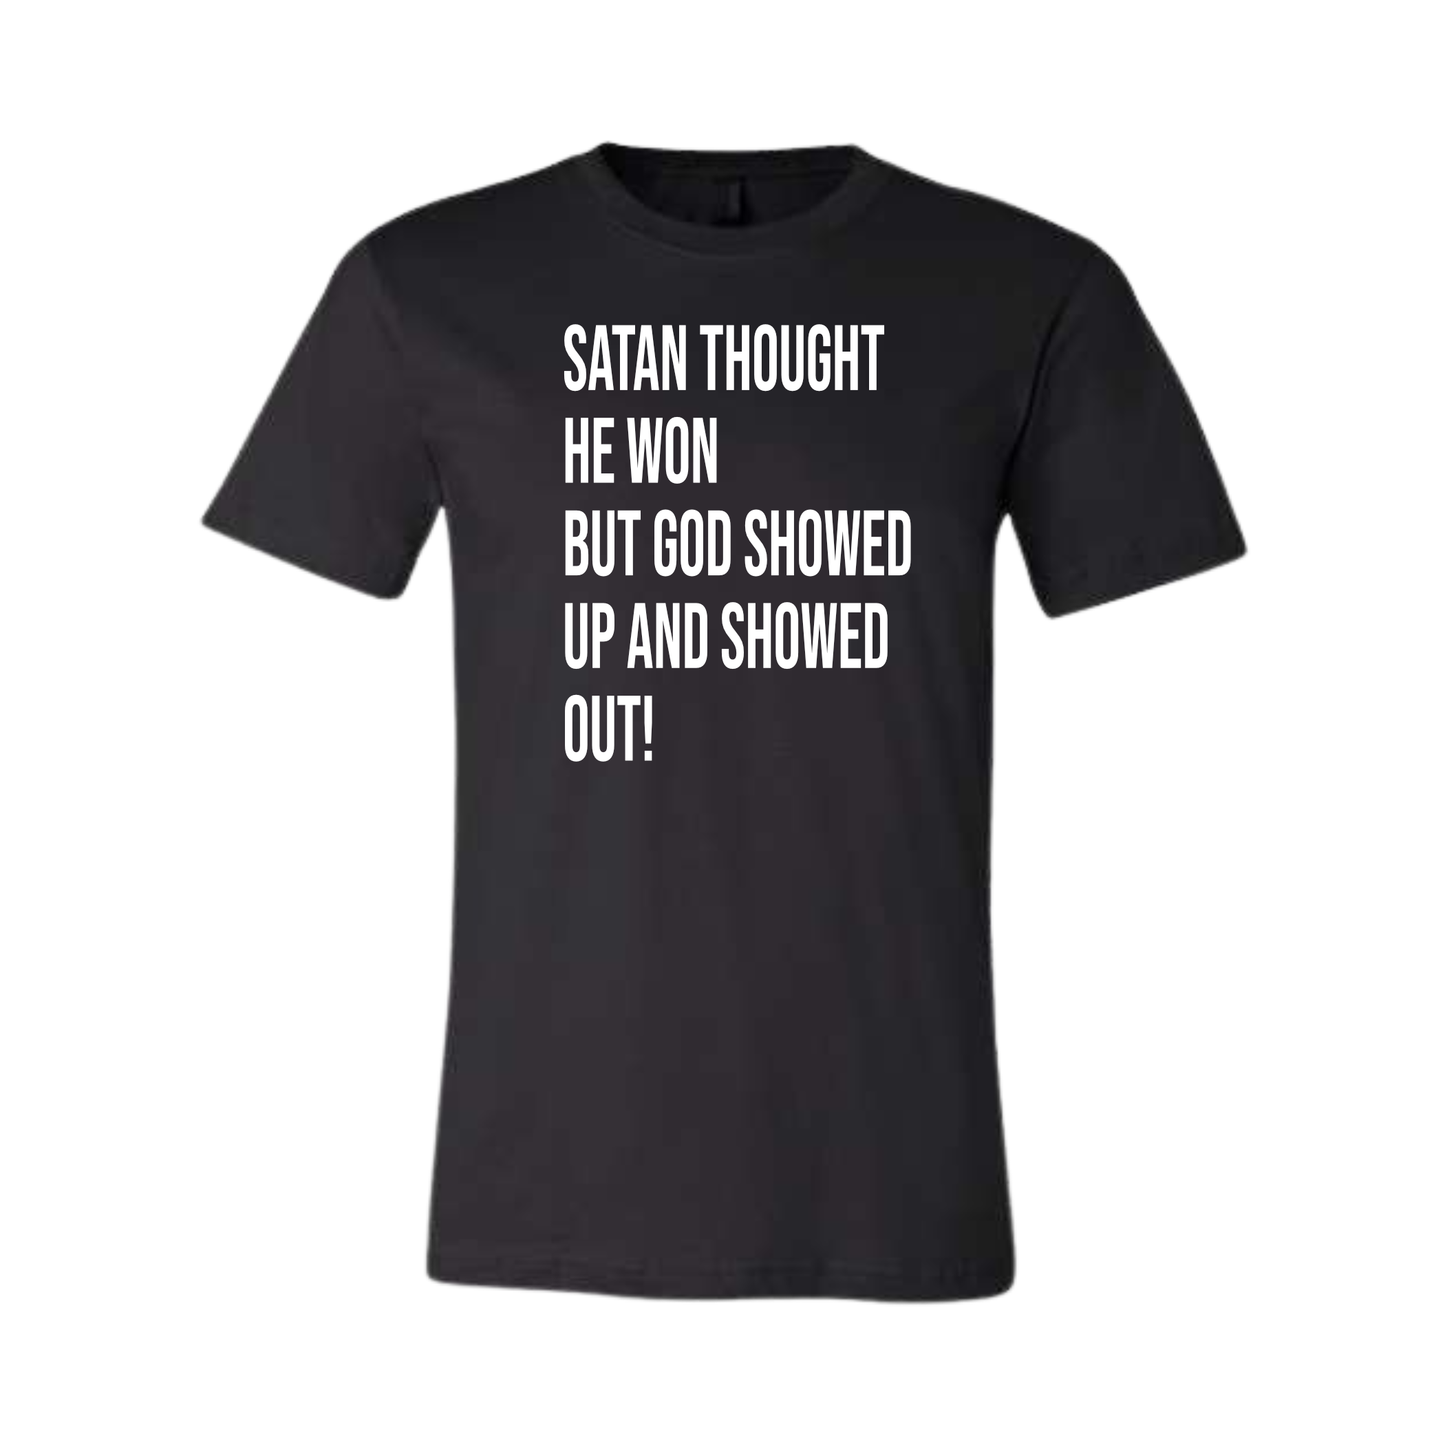 Satan thought he won T-shirt